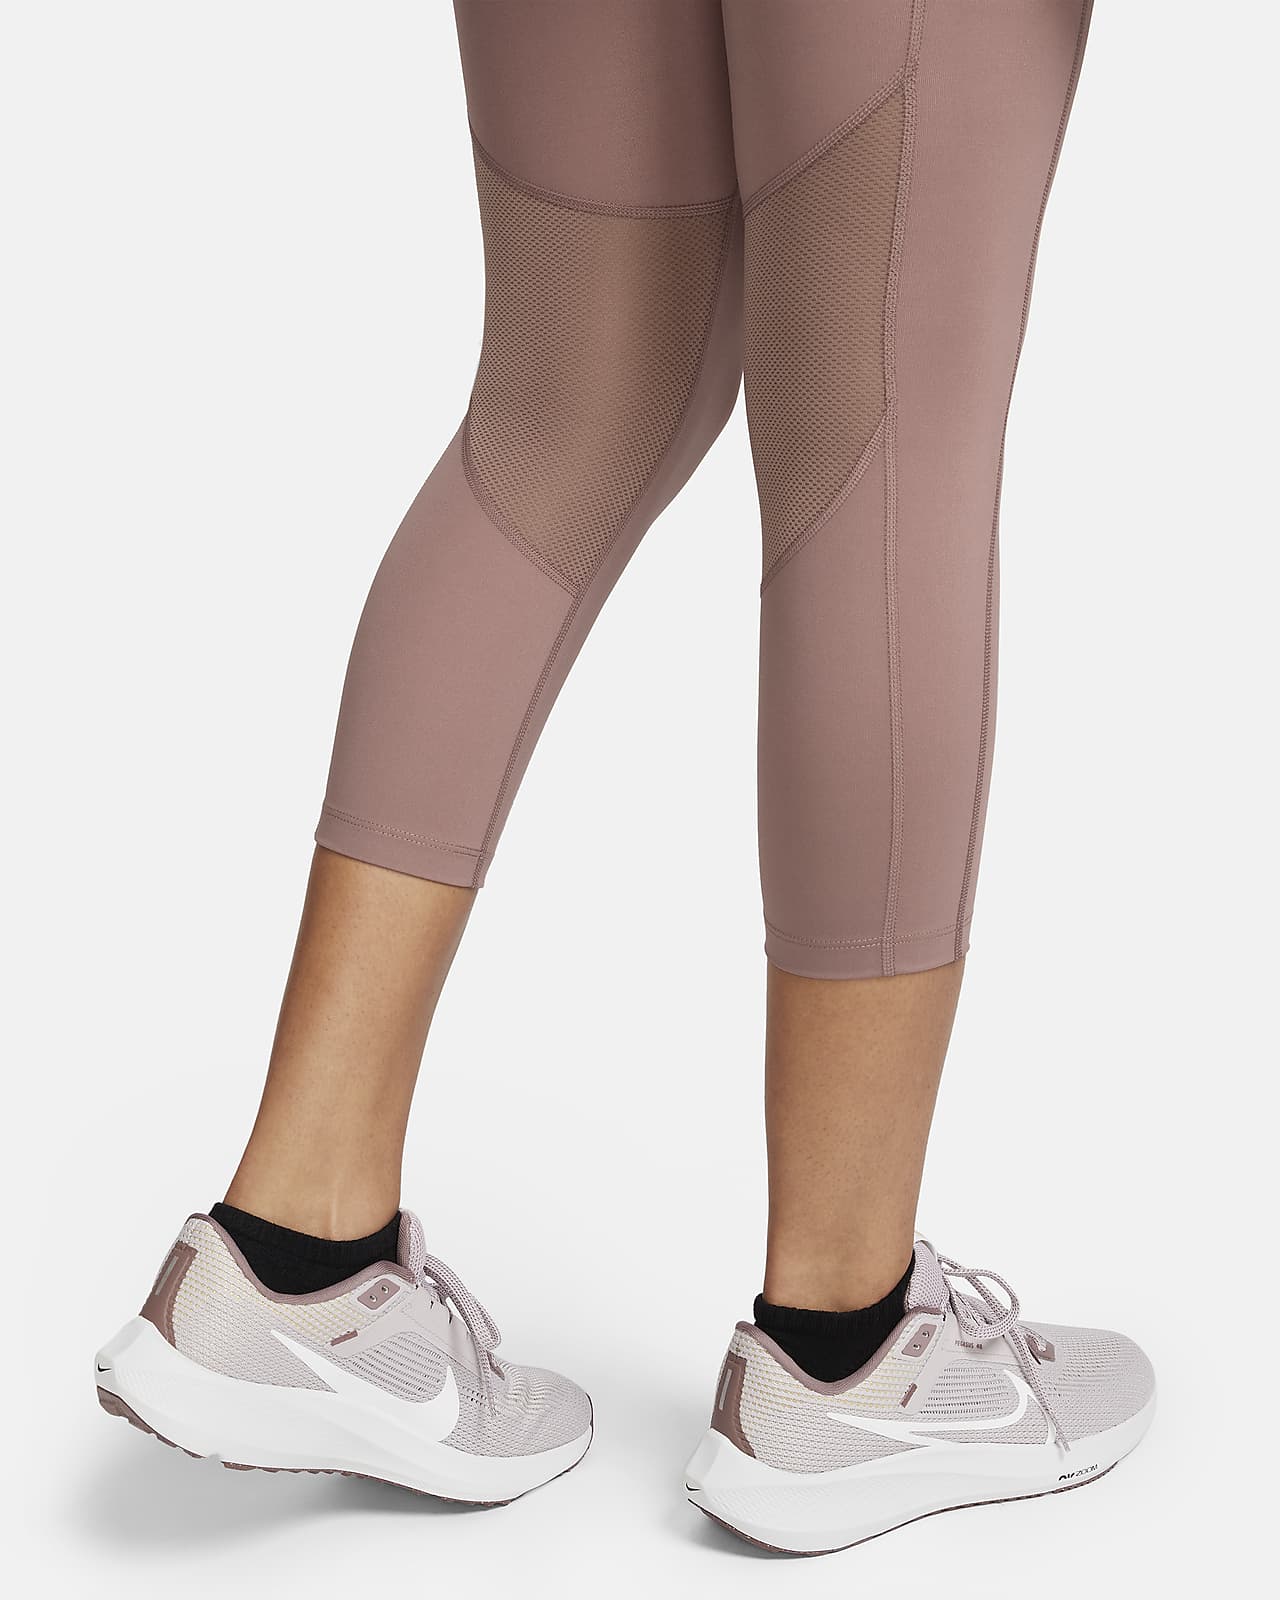 NIKE FAST WOMENS Dri-Fit Gym Leggings Activewear Sport Running